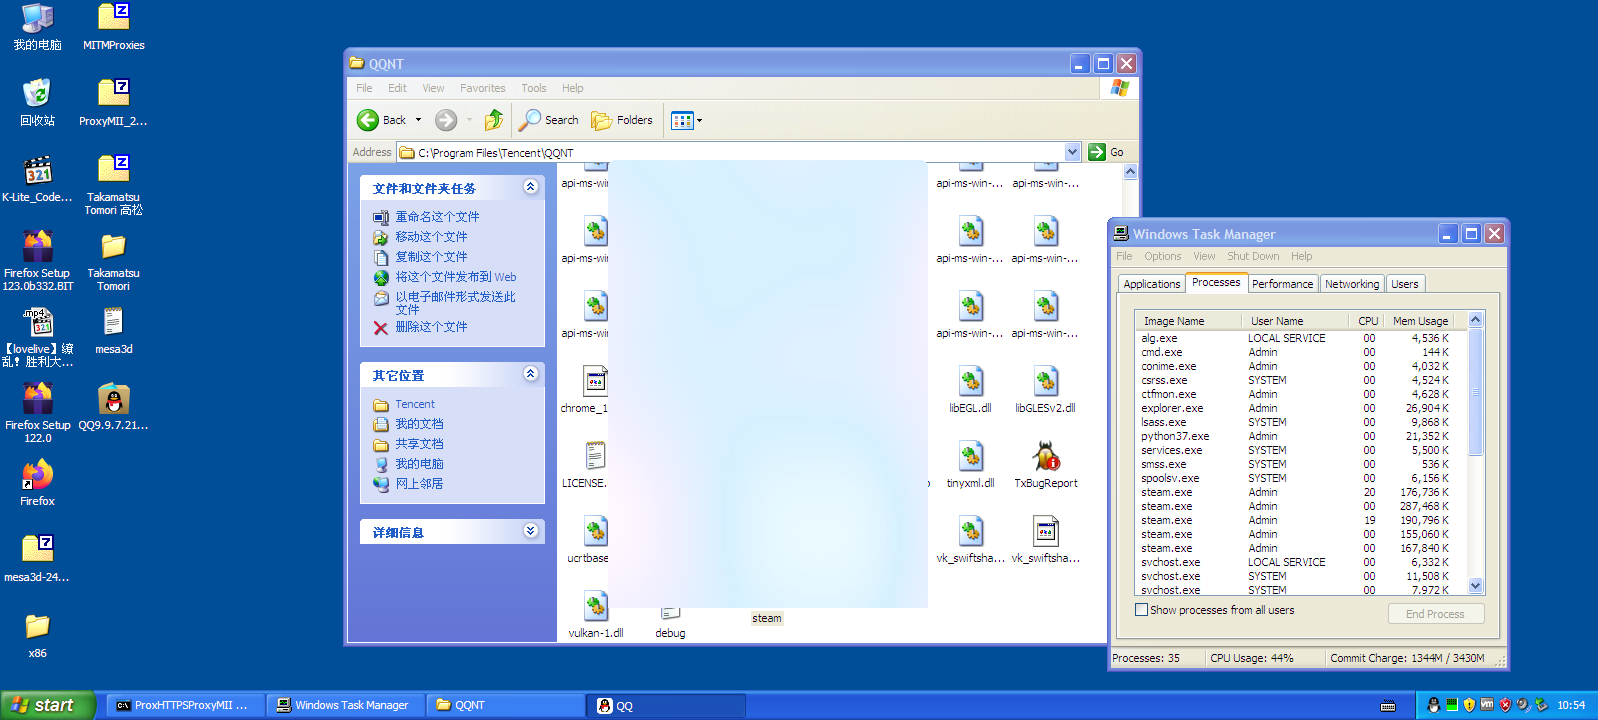 Windows-XP-Professional-2024-02-16-22-50-5815f915418914b337.png